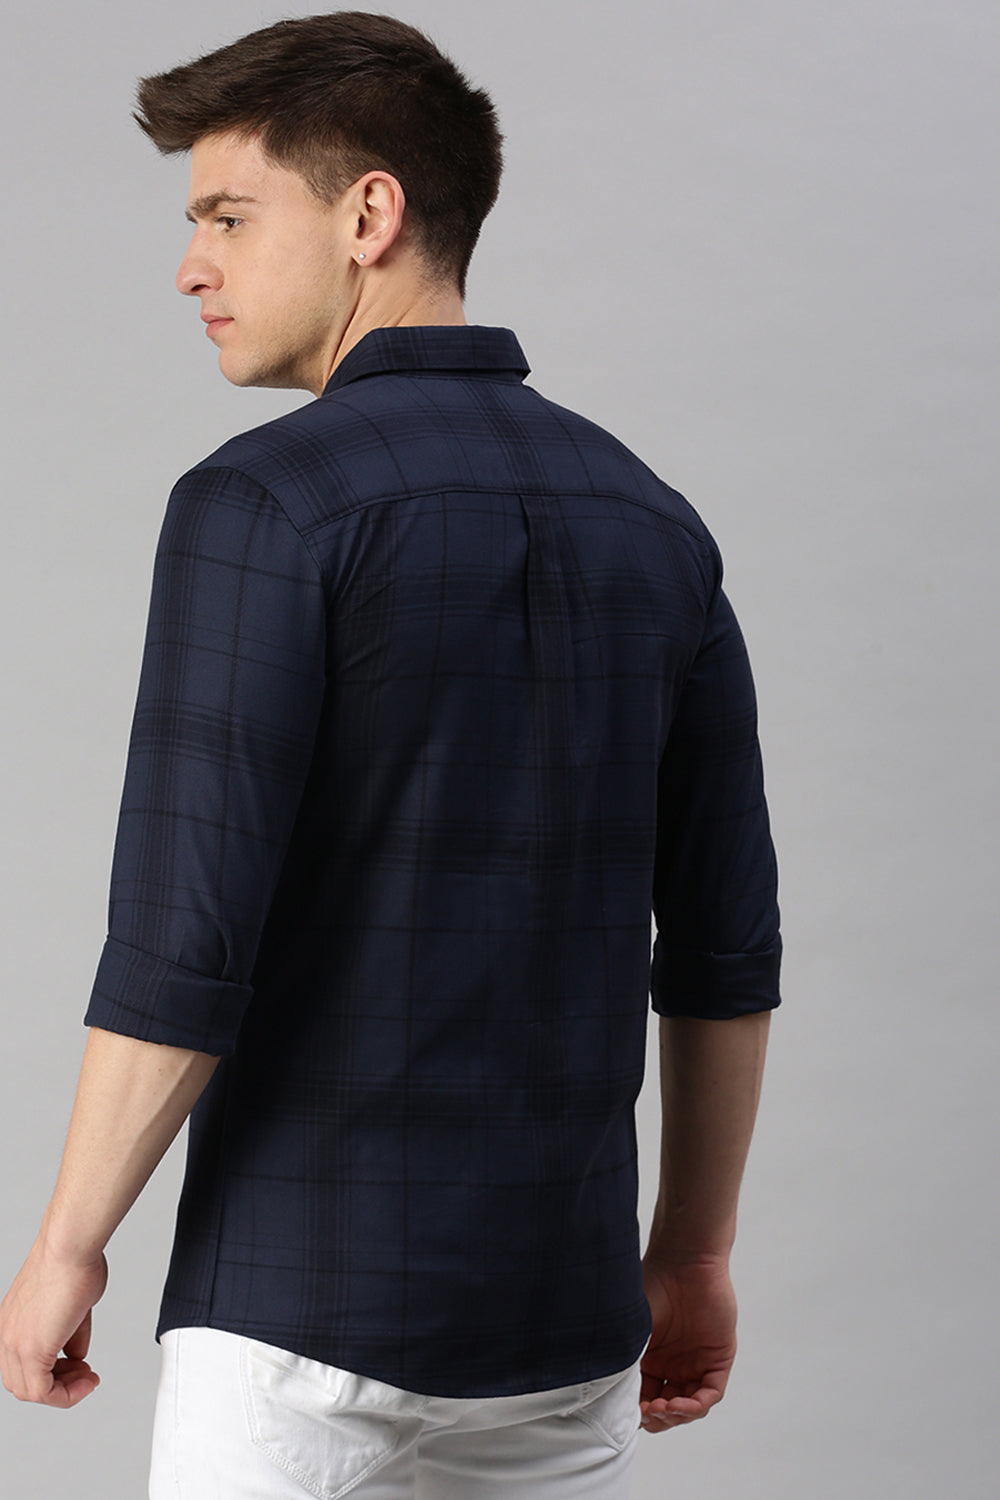 CP BRO Men's Cotton Full Sleeve Checked Slim Fit Collar Neck Navy Color Woven Shirt | Sbo1-44 B